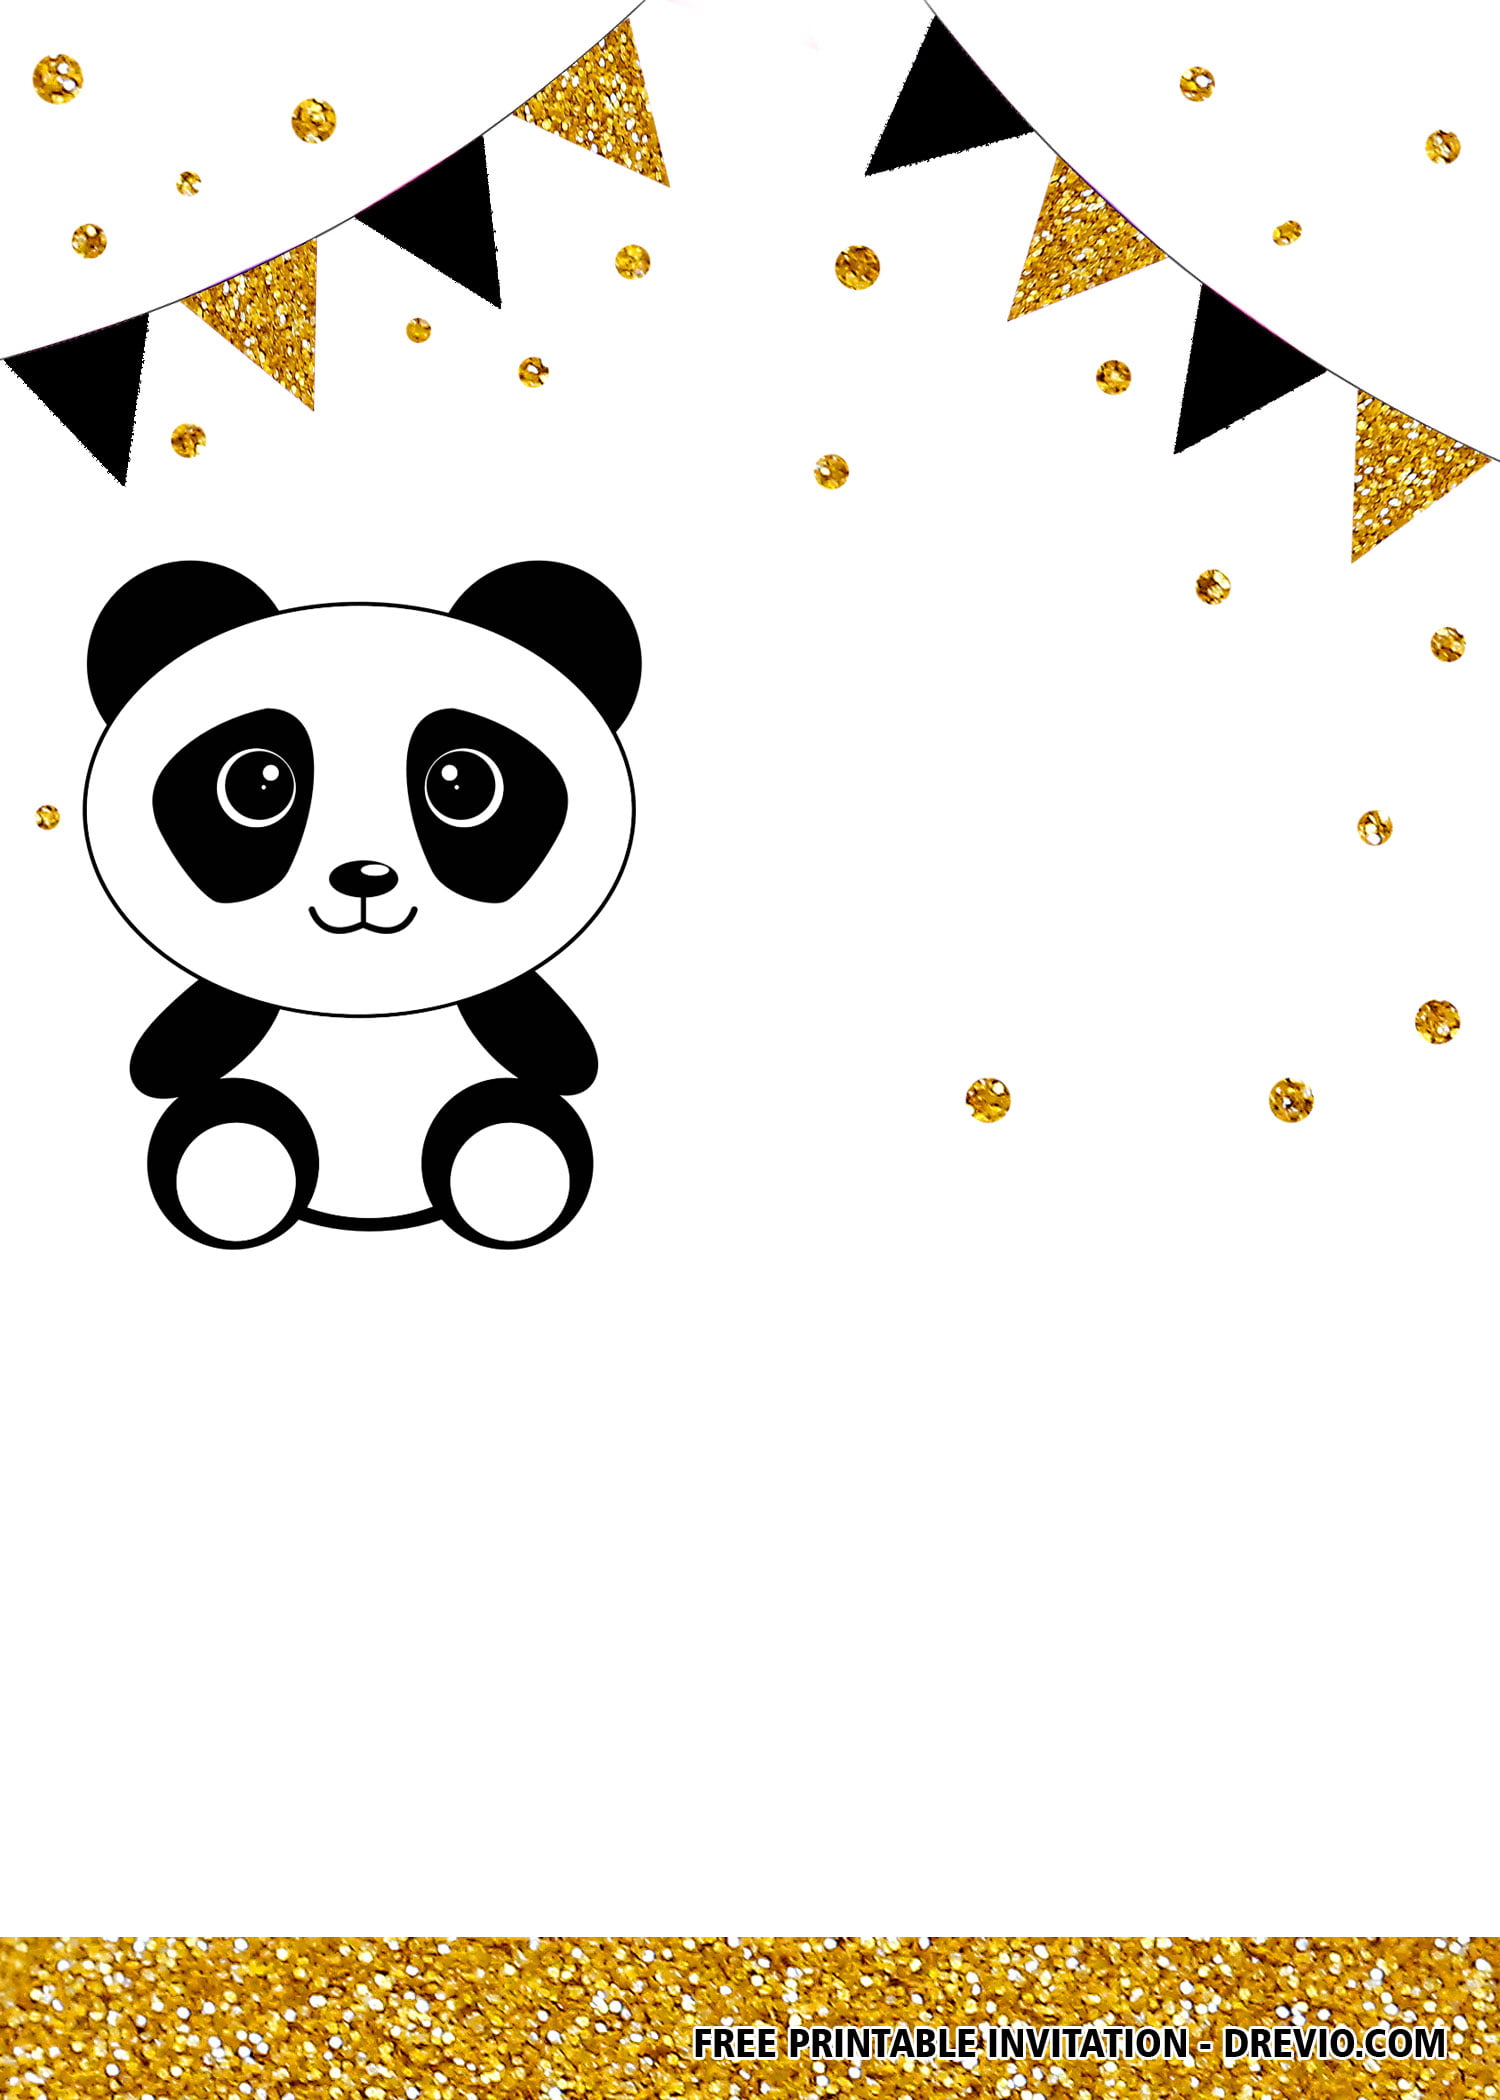 panda-1st-birthday-printable-mini-set-panda-party-printable